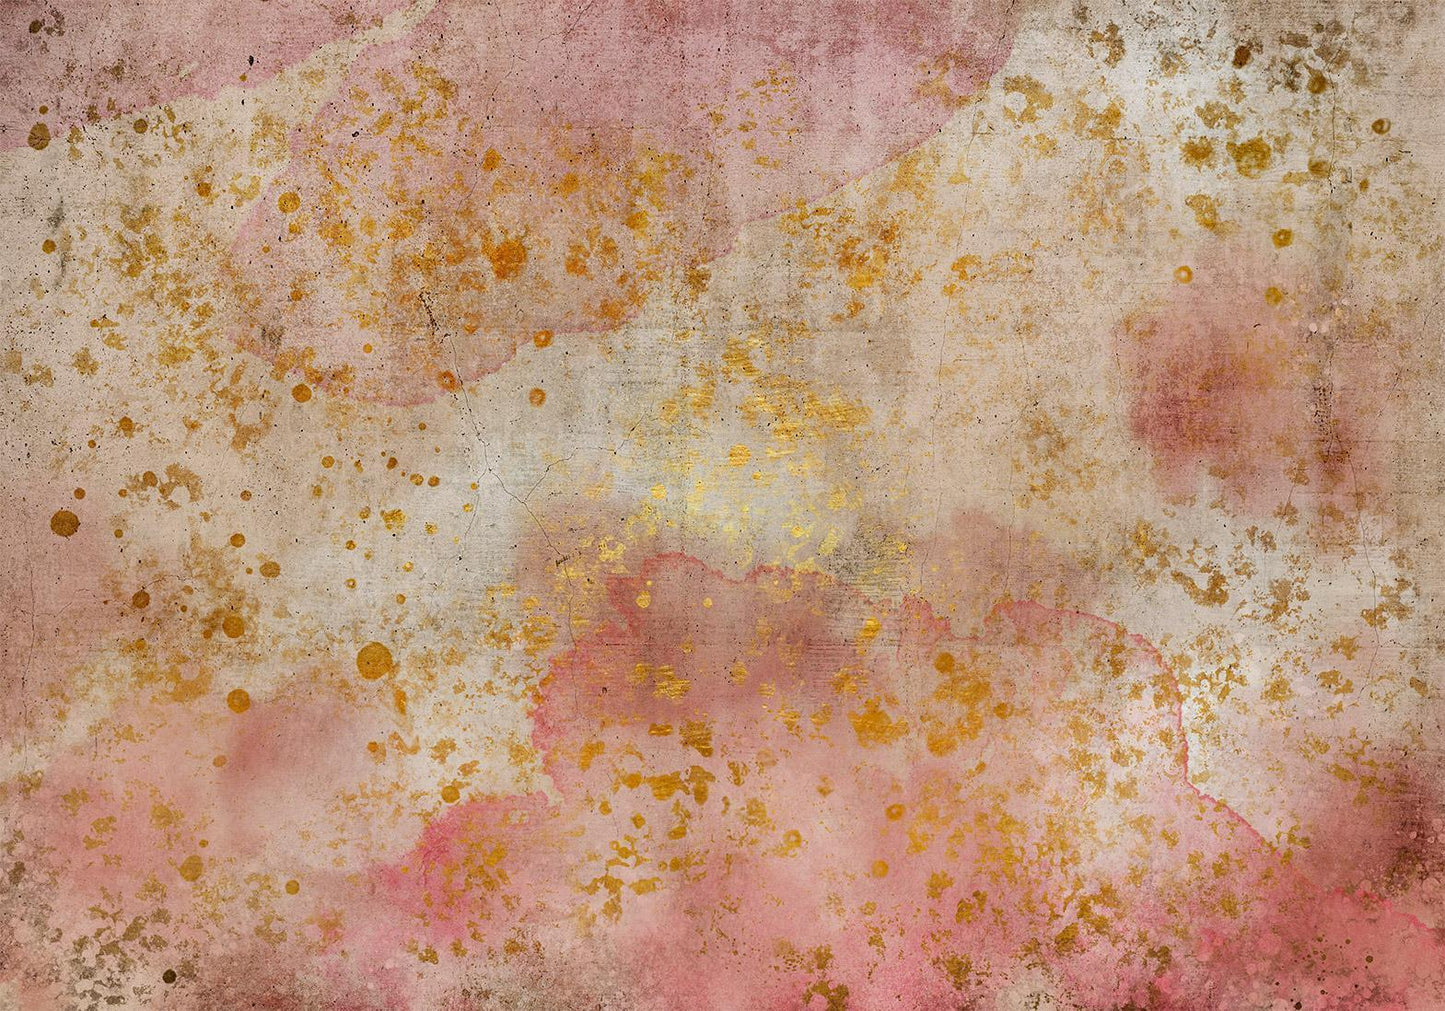 Self-adhesive photo wallpaper - Golden Bubbles